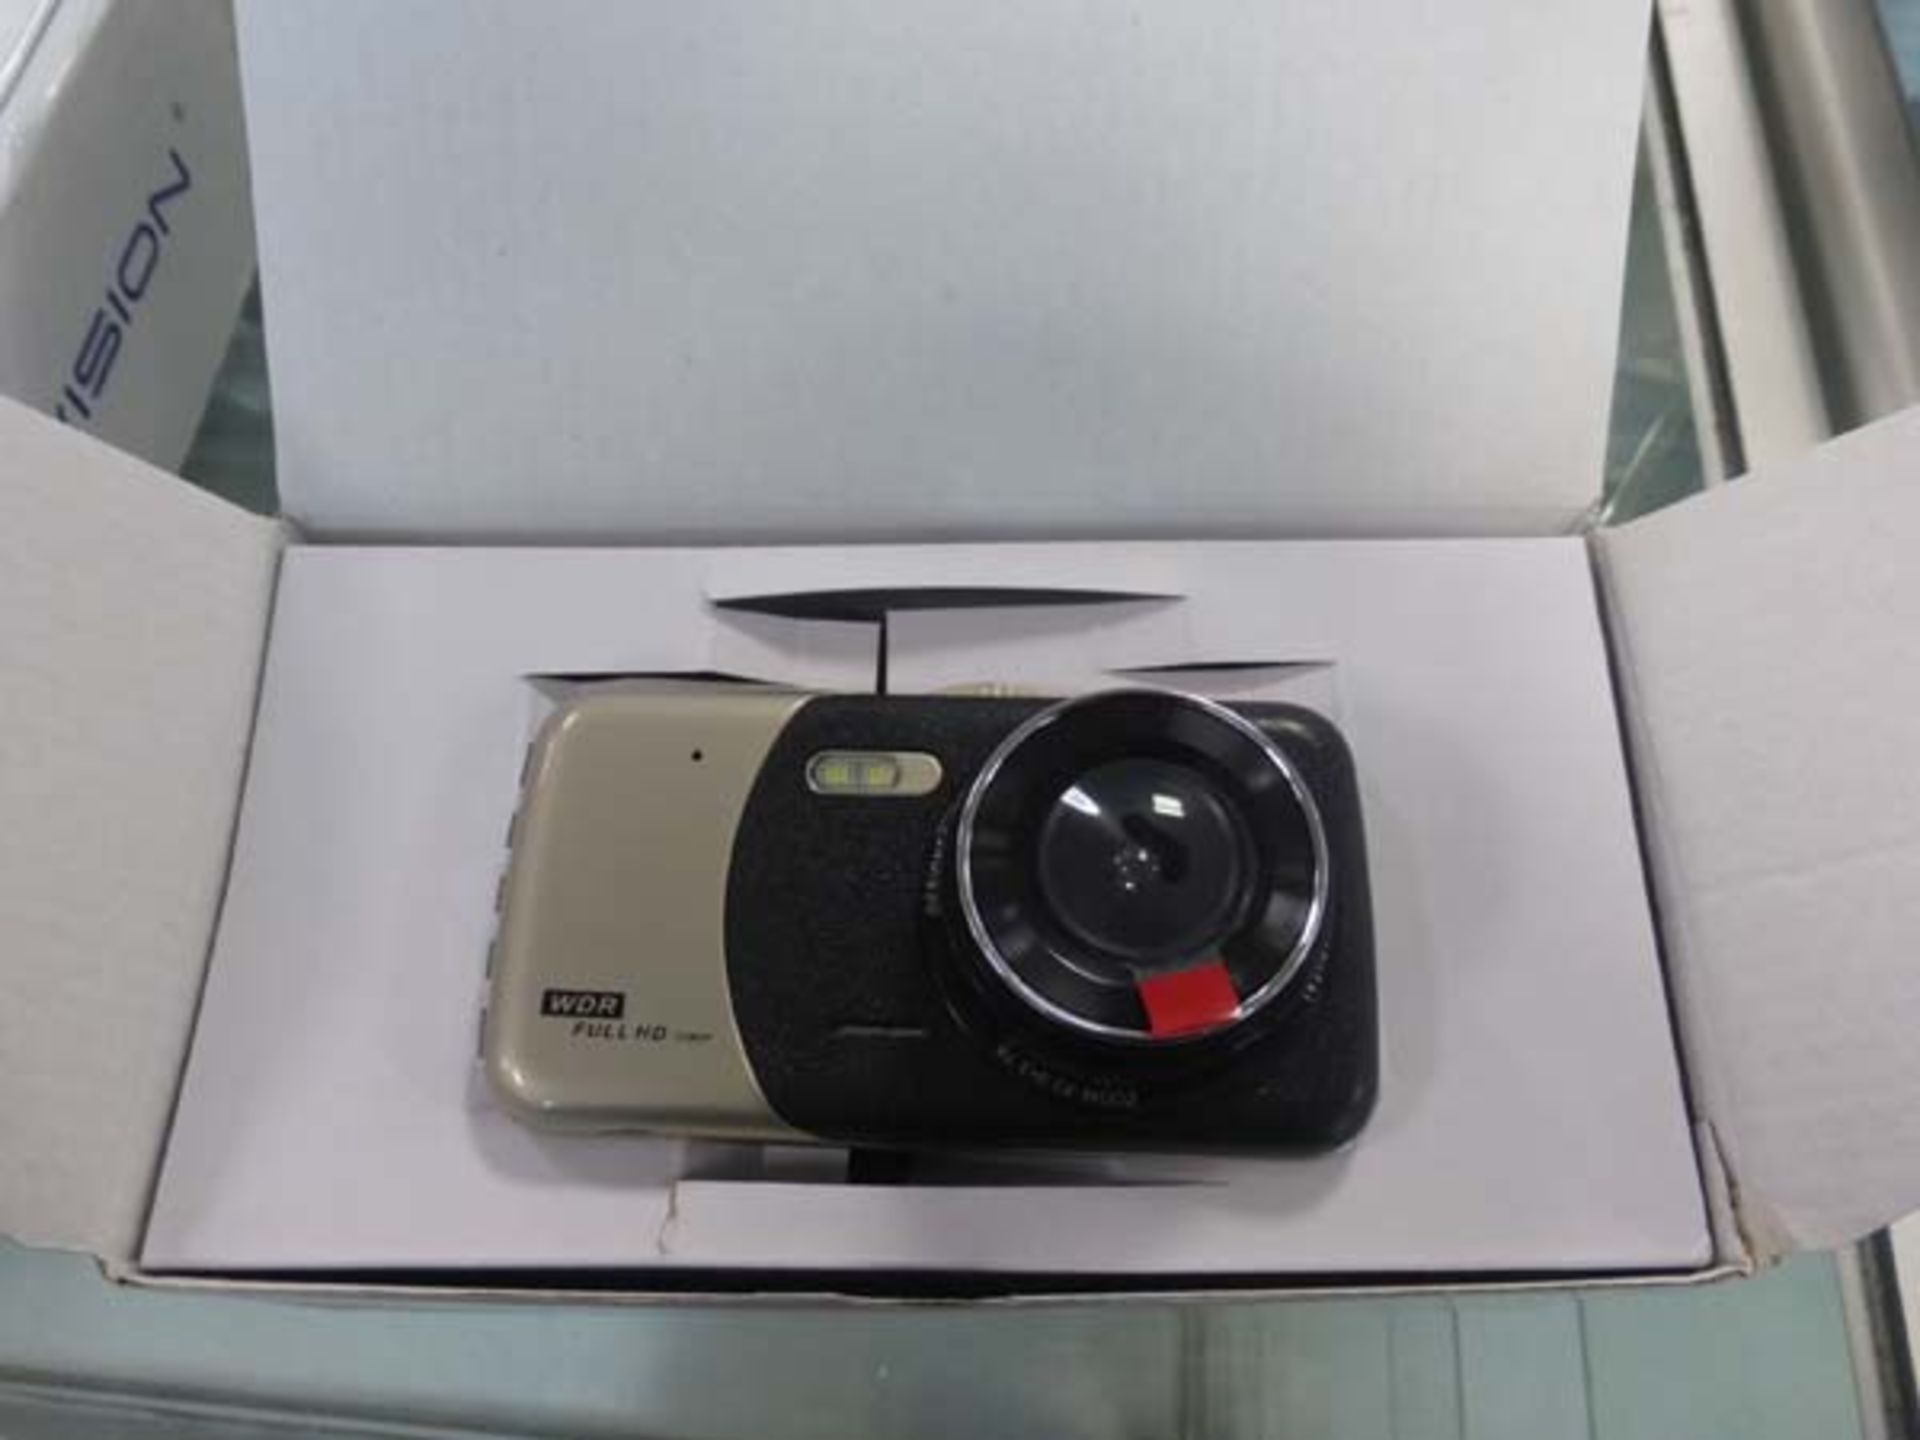 2231 HIRRX HD dual lens dashcam kit in box